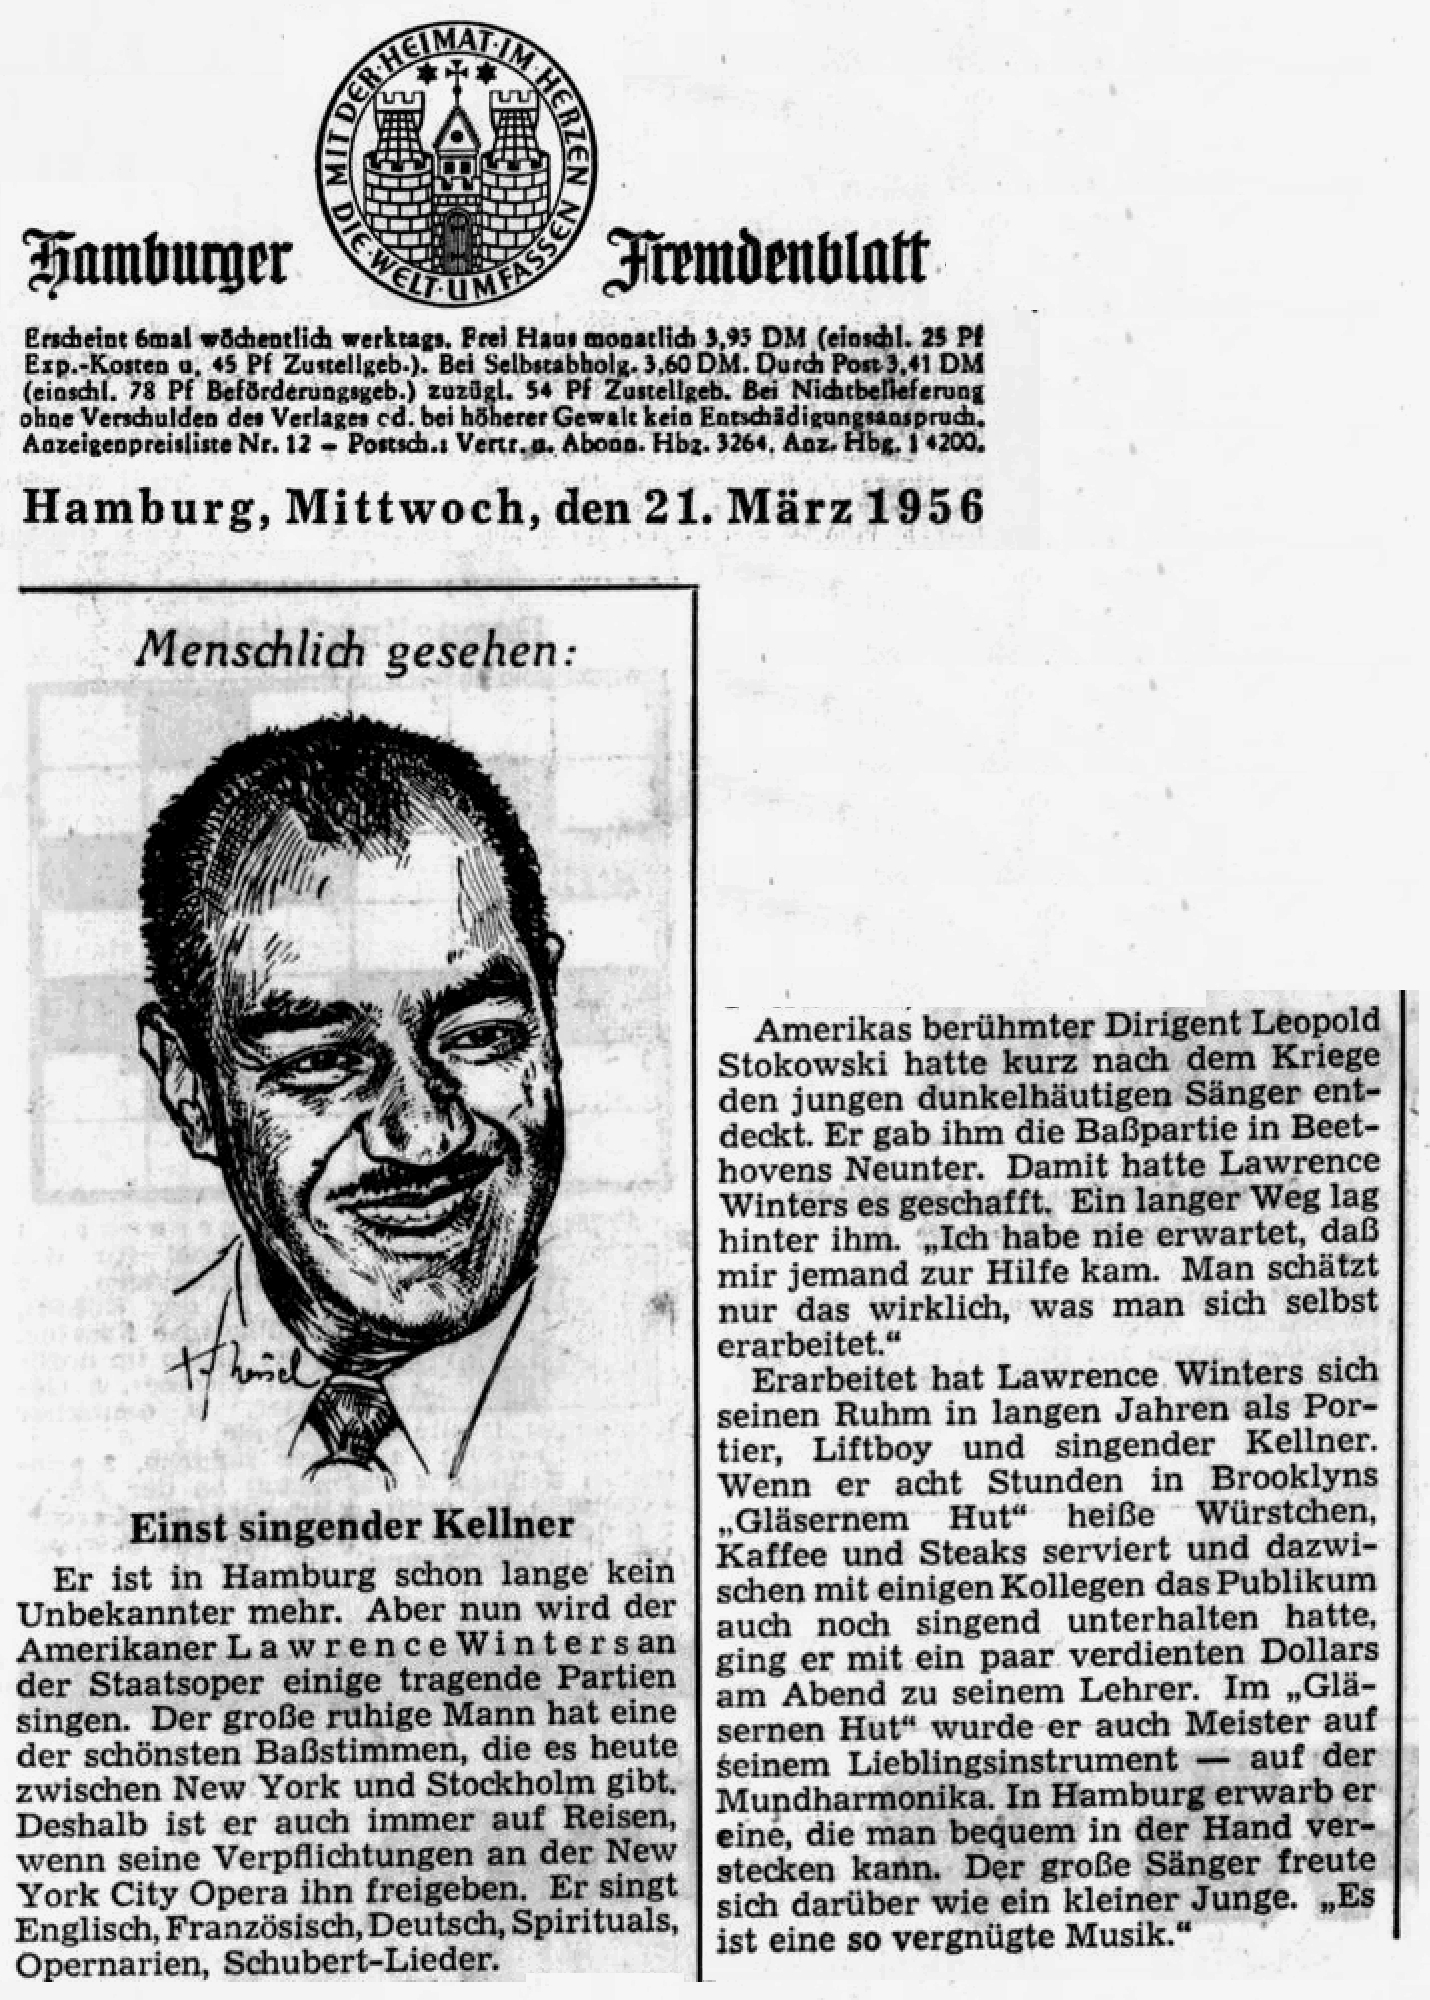 Lawrence WINTERS, Einst singender Kellner, Hamburger Abendblatt, 21.03.1956, page 1, clicquer pour une vue agrandie